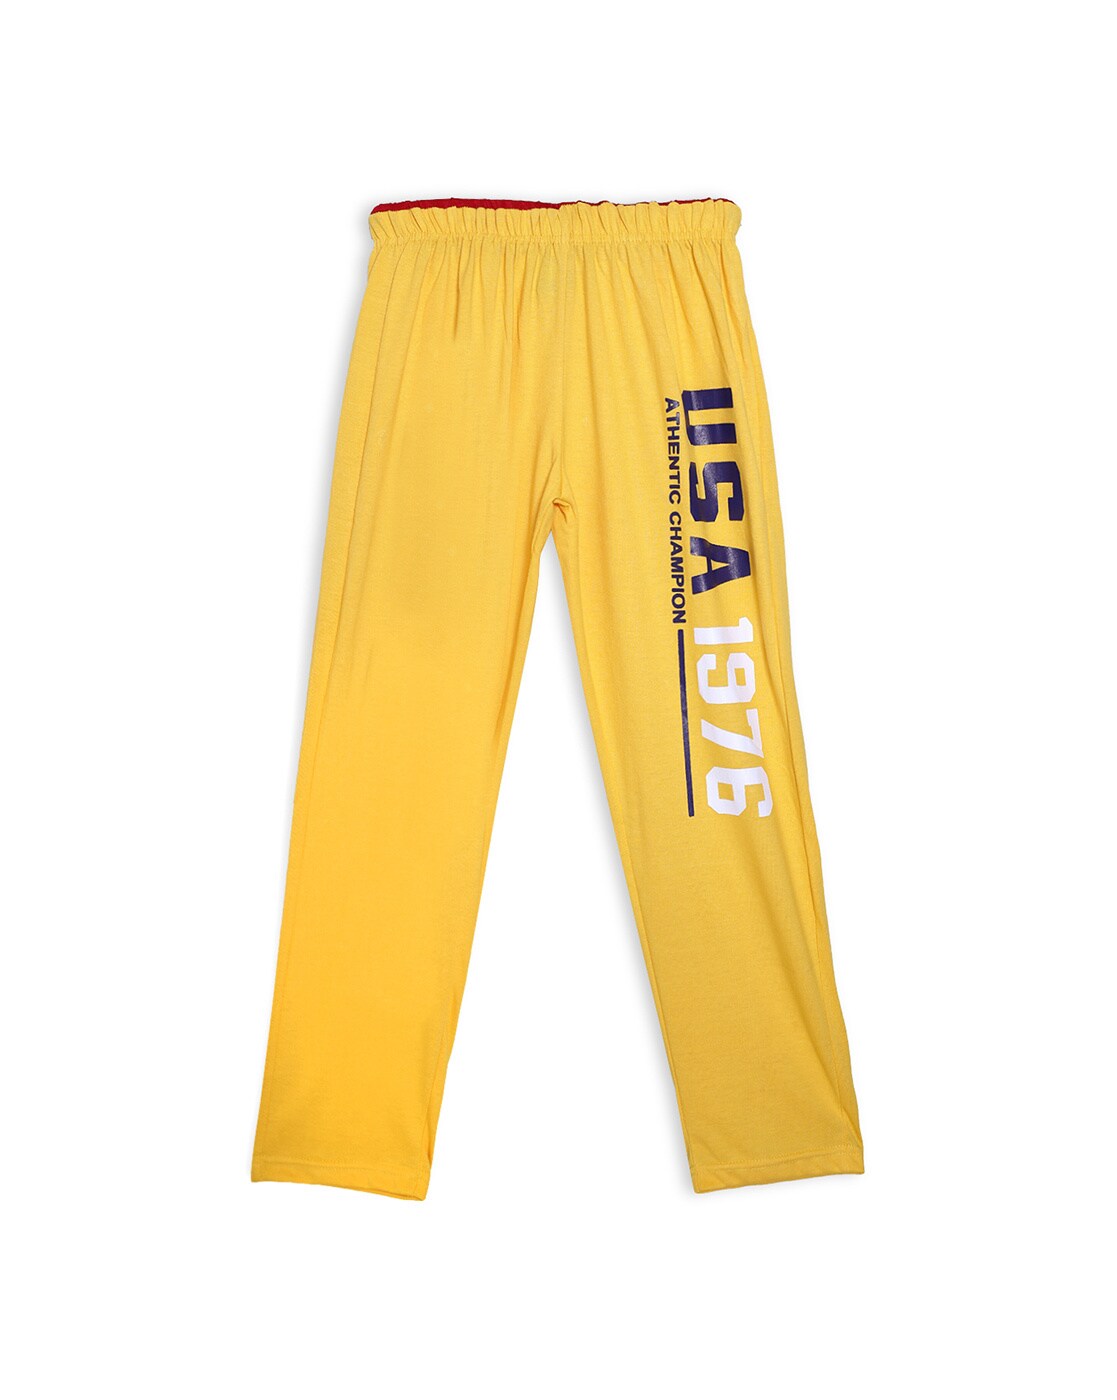 Buy Yellow Track Pants for Men by Adidas Originals Online | Ajio.com